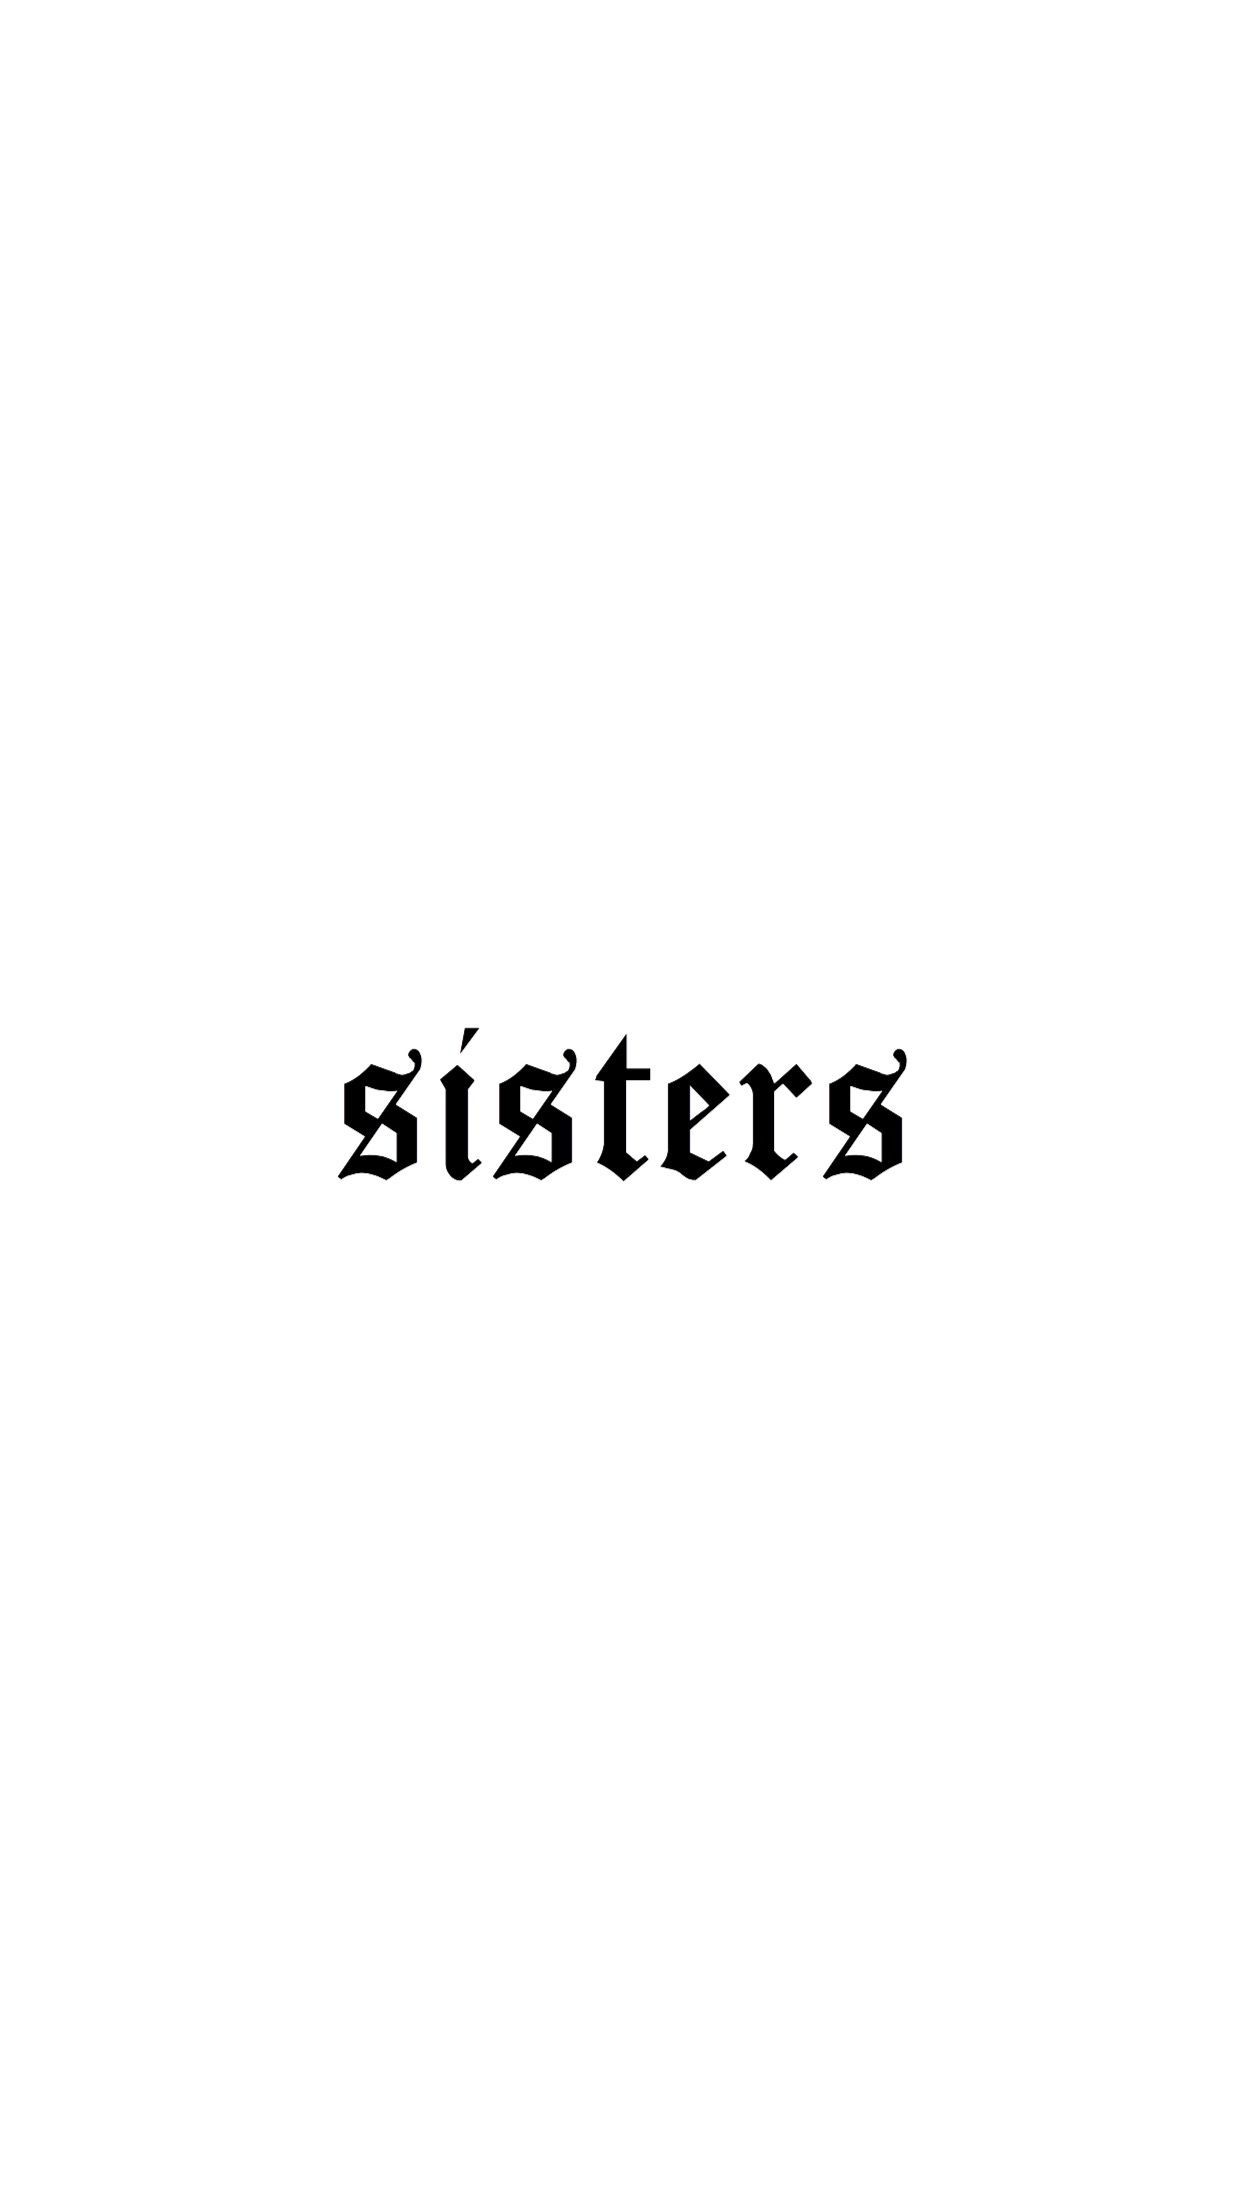 Single James Charles White and Black Sisters Wallpaper. Sister